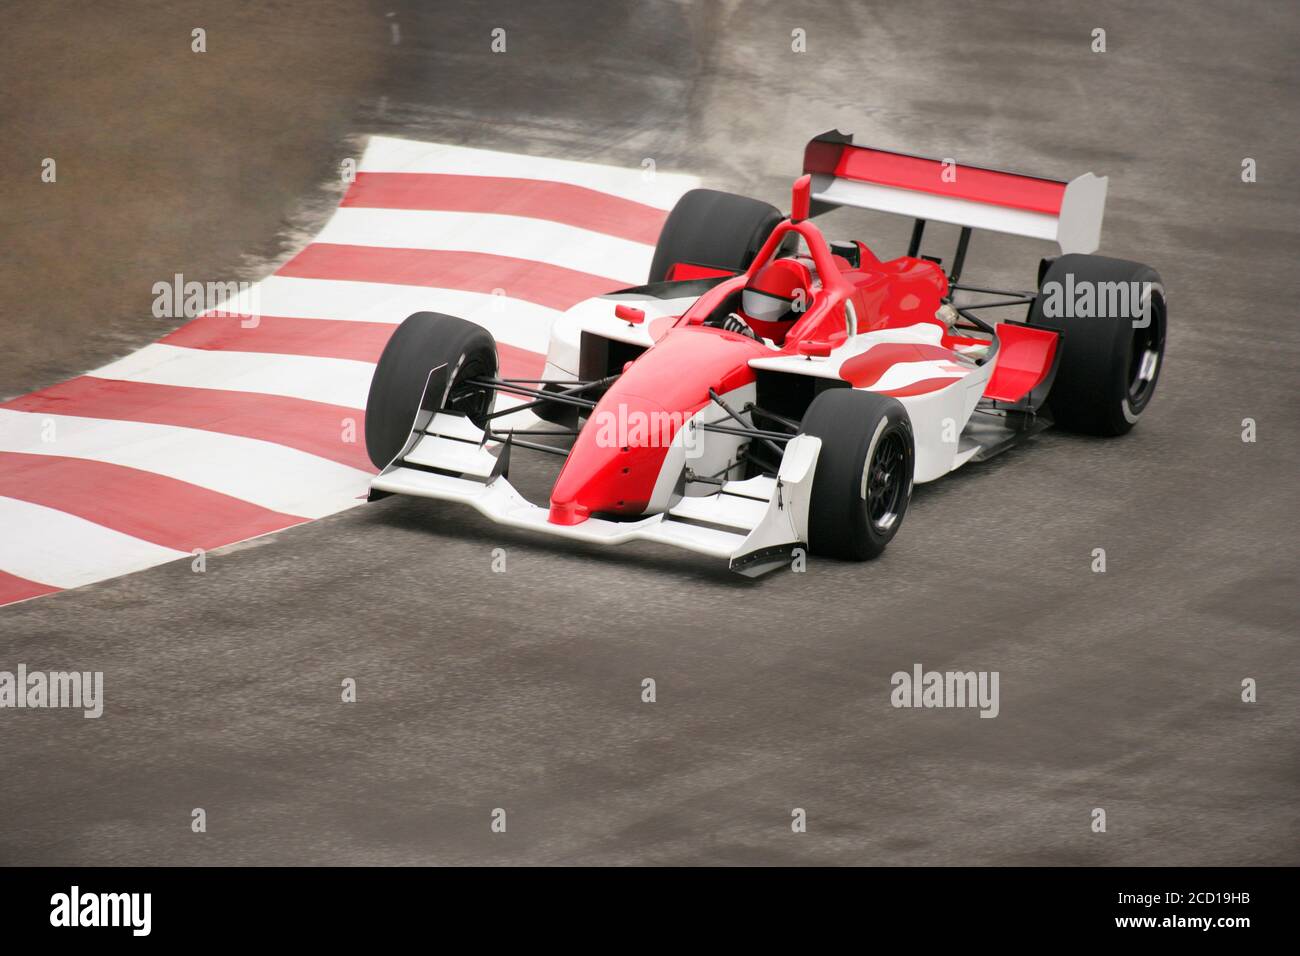 Race Car On The Track Stock Photo - Alamy